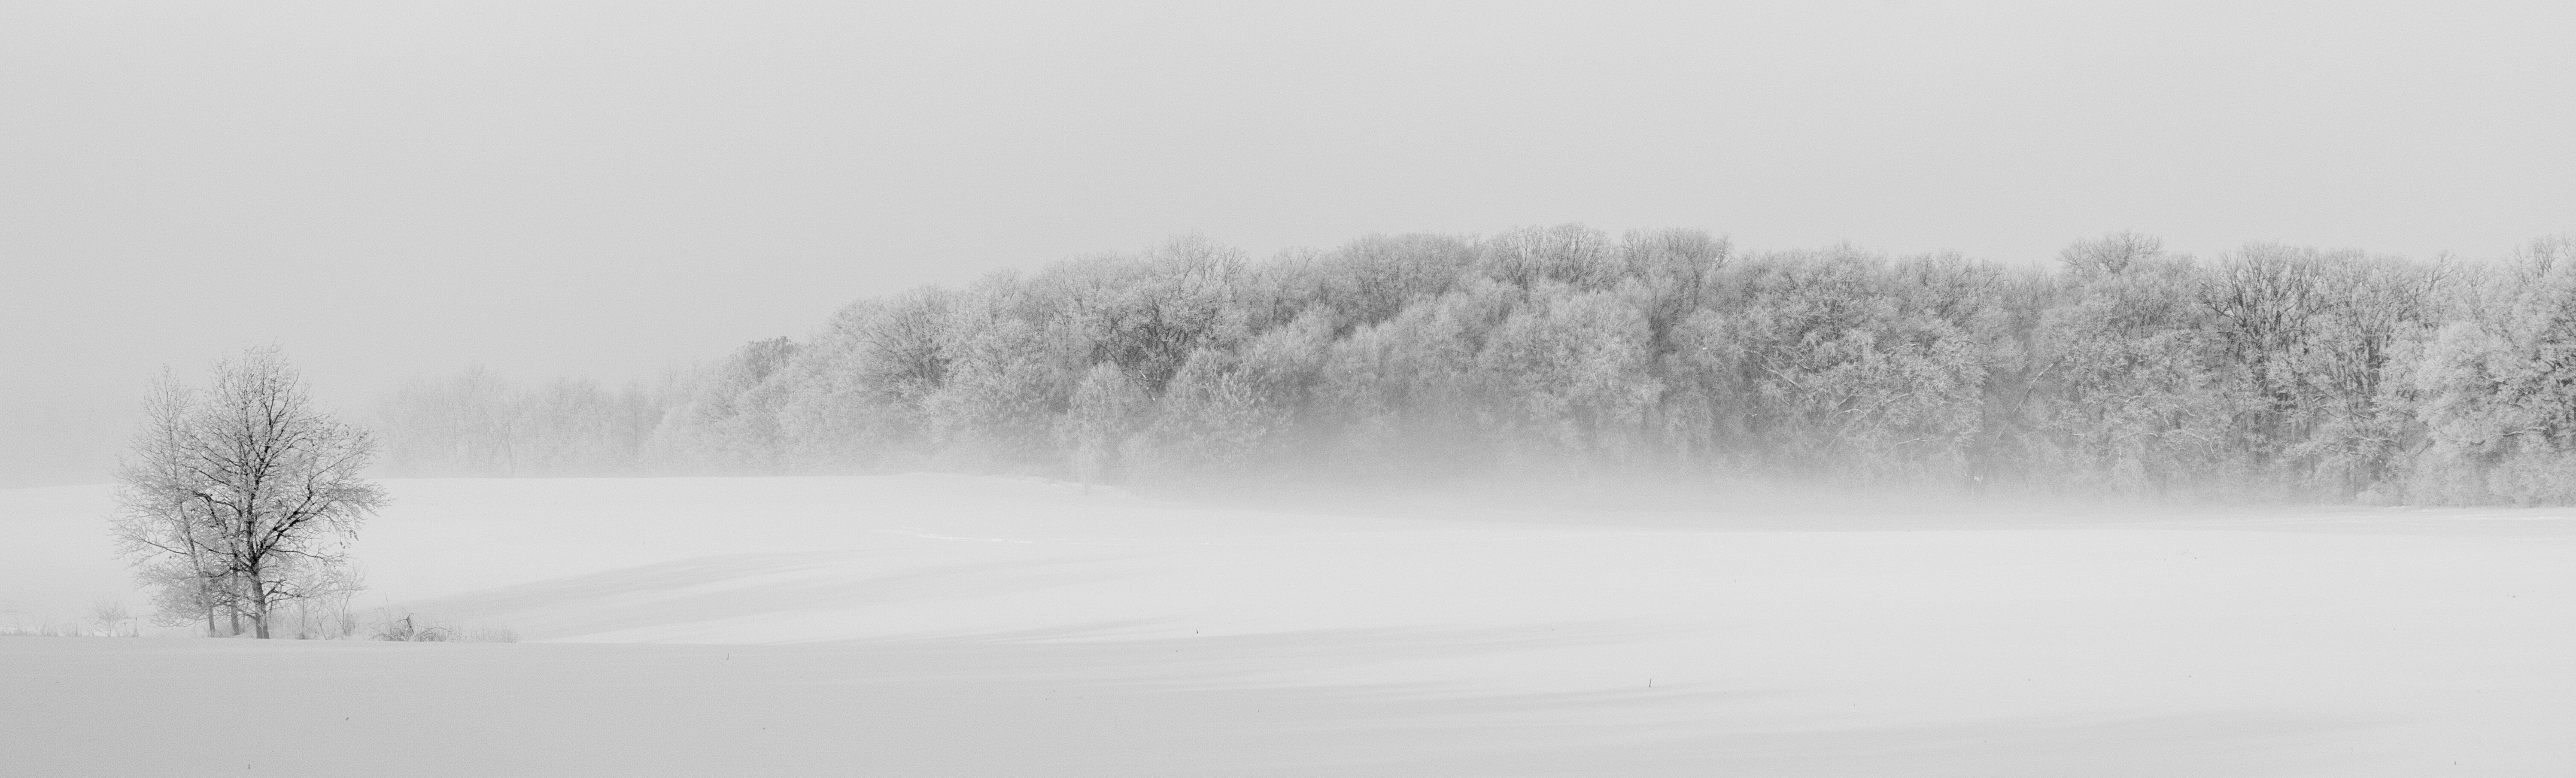 Winter forest illustration photo